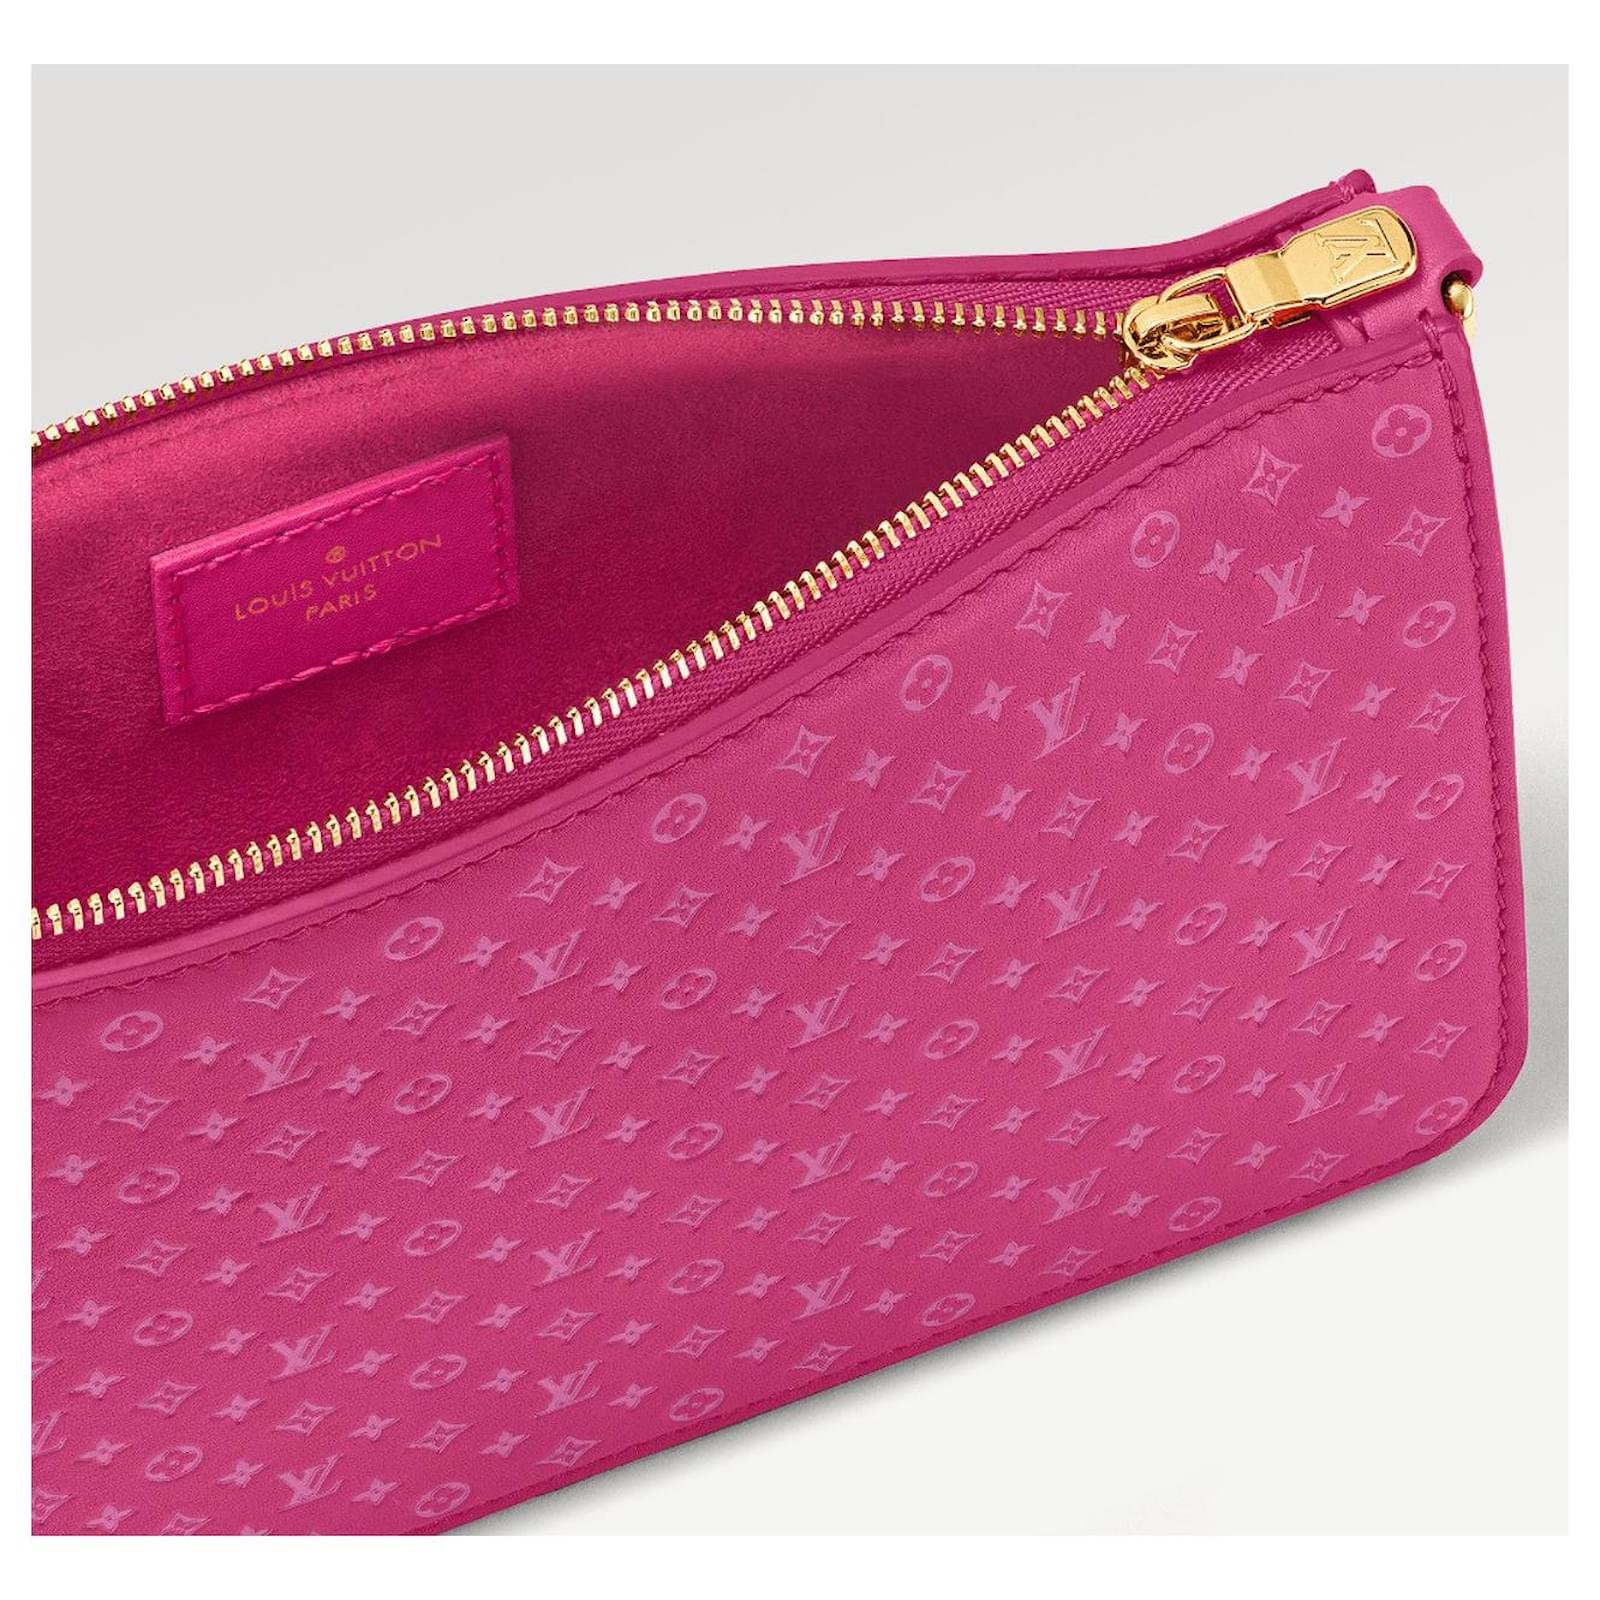 Louis Vuitton Riverside Handbag in Lie de Vin Red LV Charm N40052 | eBay